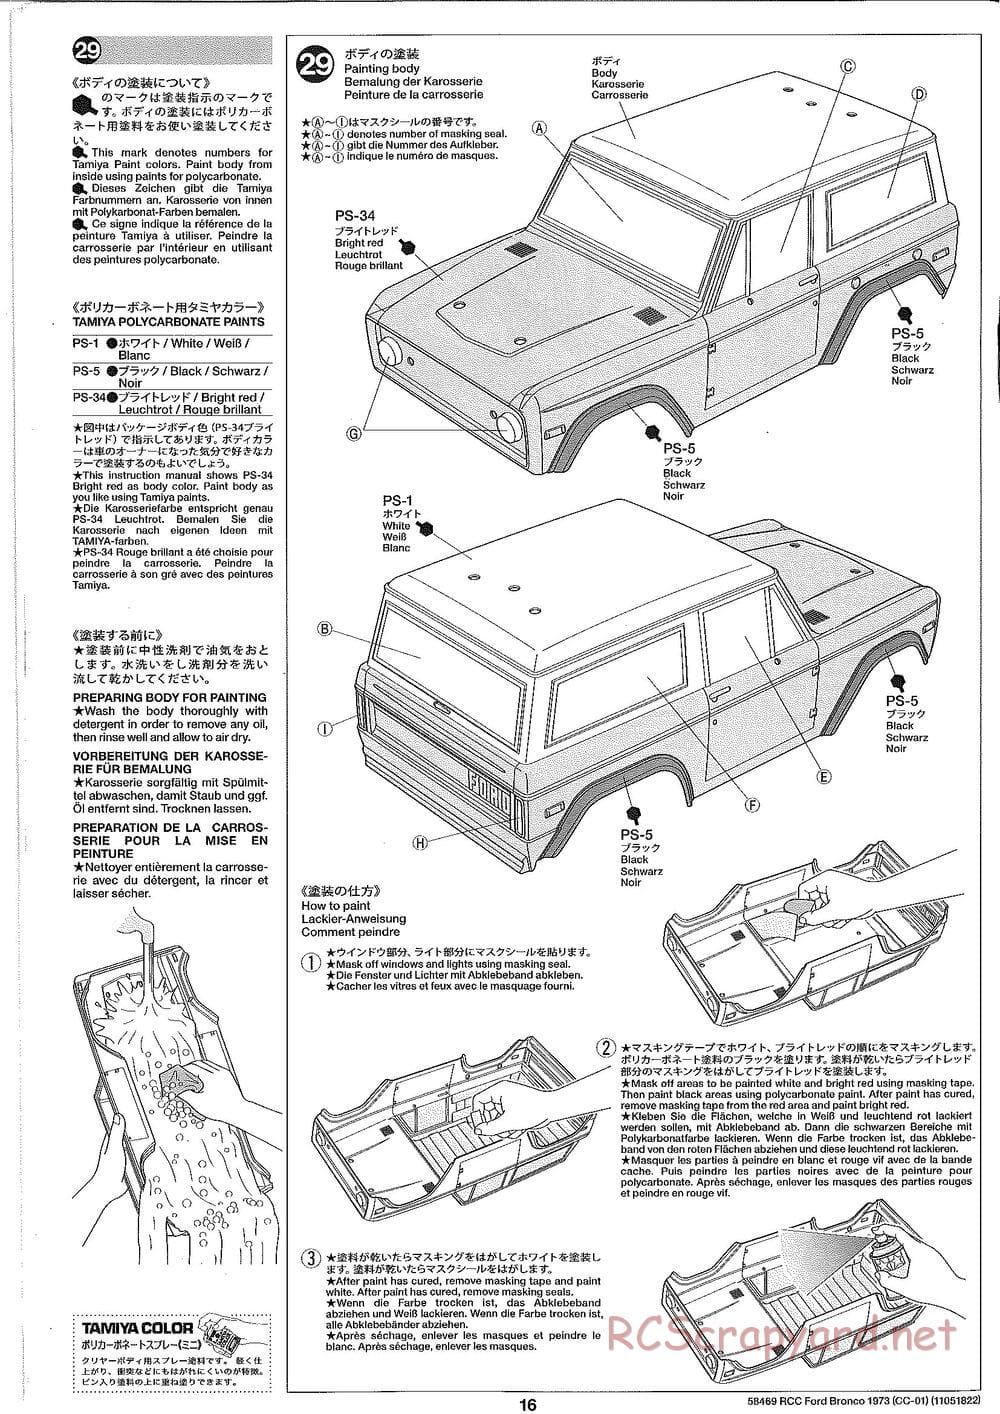 Tamiya - Ford Bronco 1973 - CC-01 Chassis - Manual - Page 16